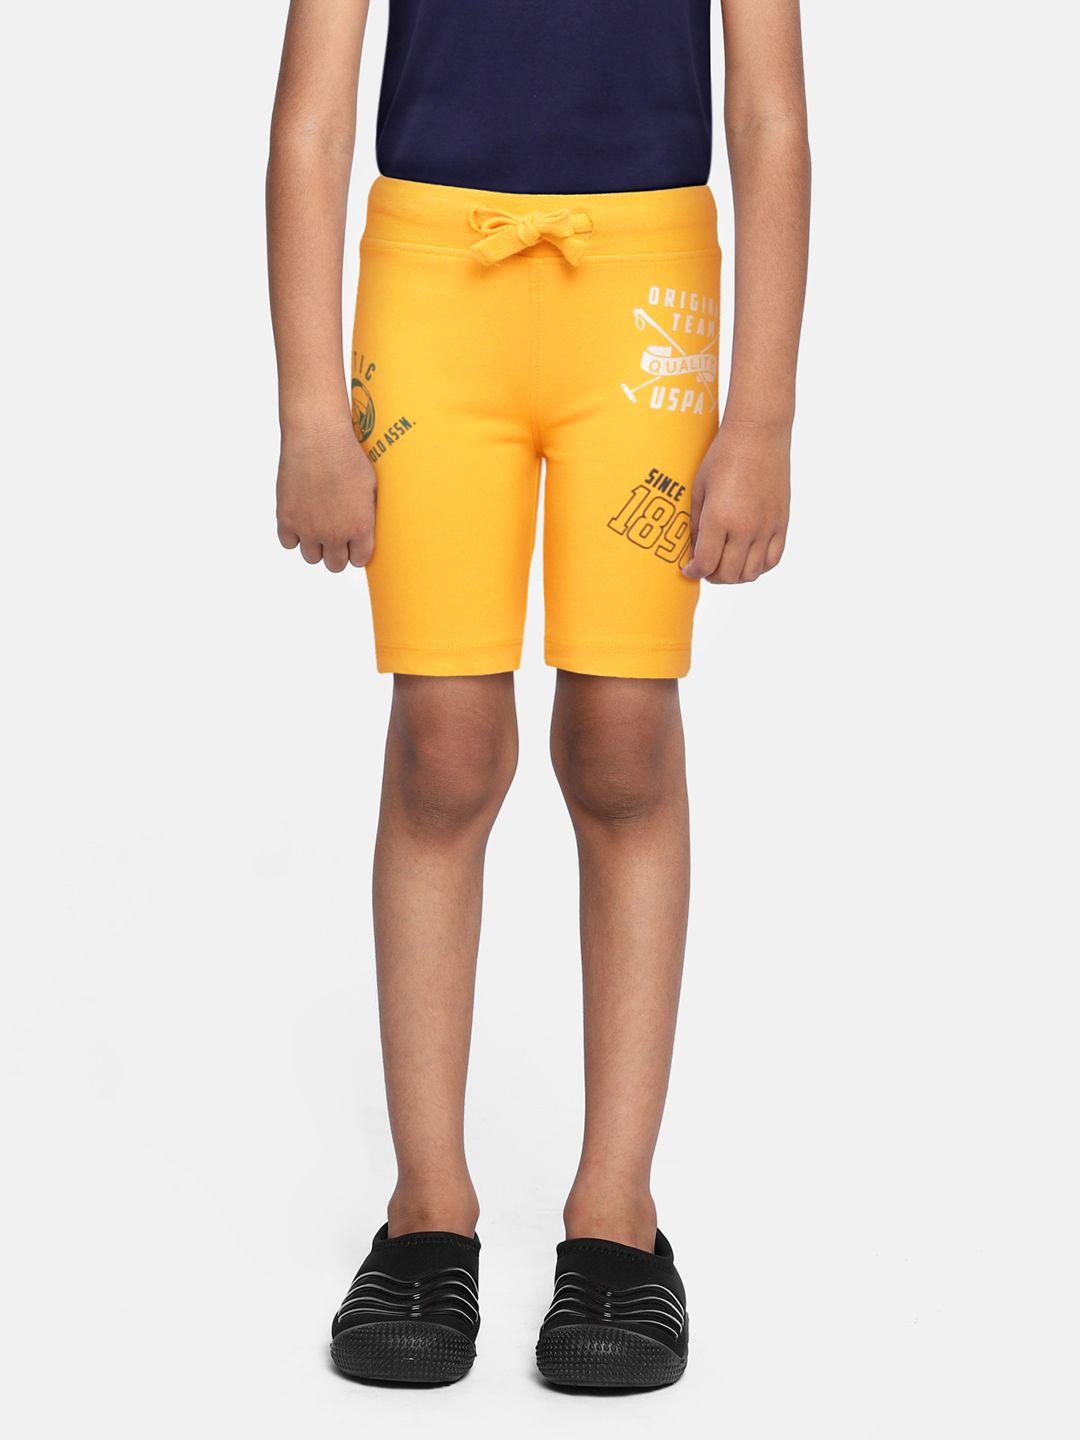 u.s. polo assn. kids boys yellow printed pure cotton shorts